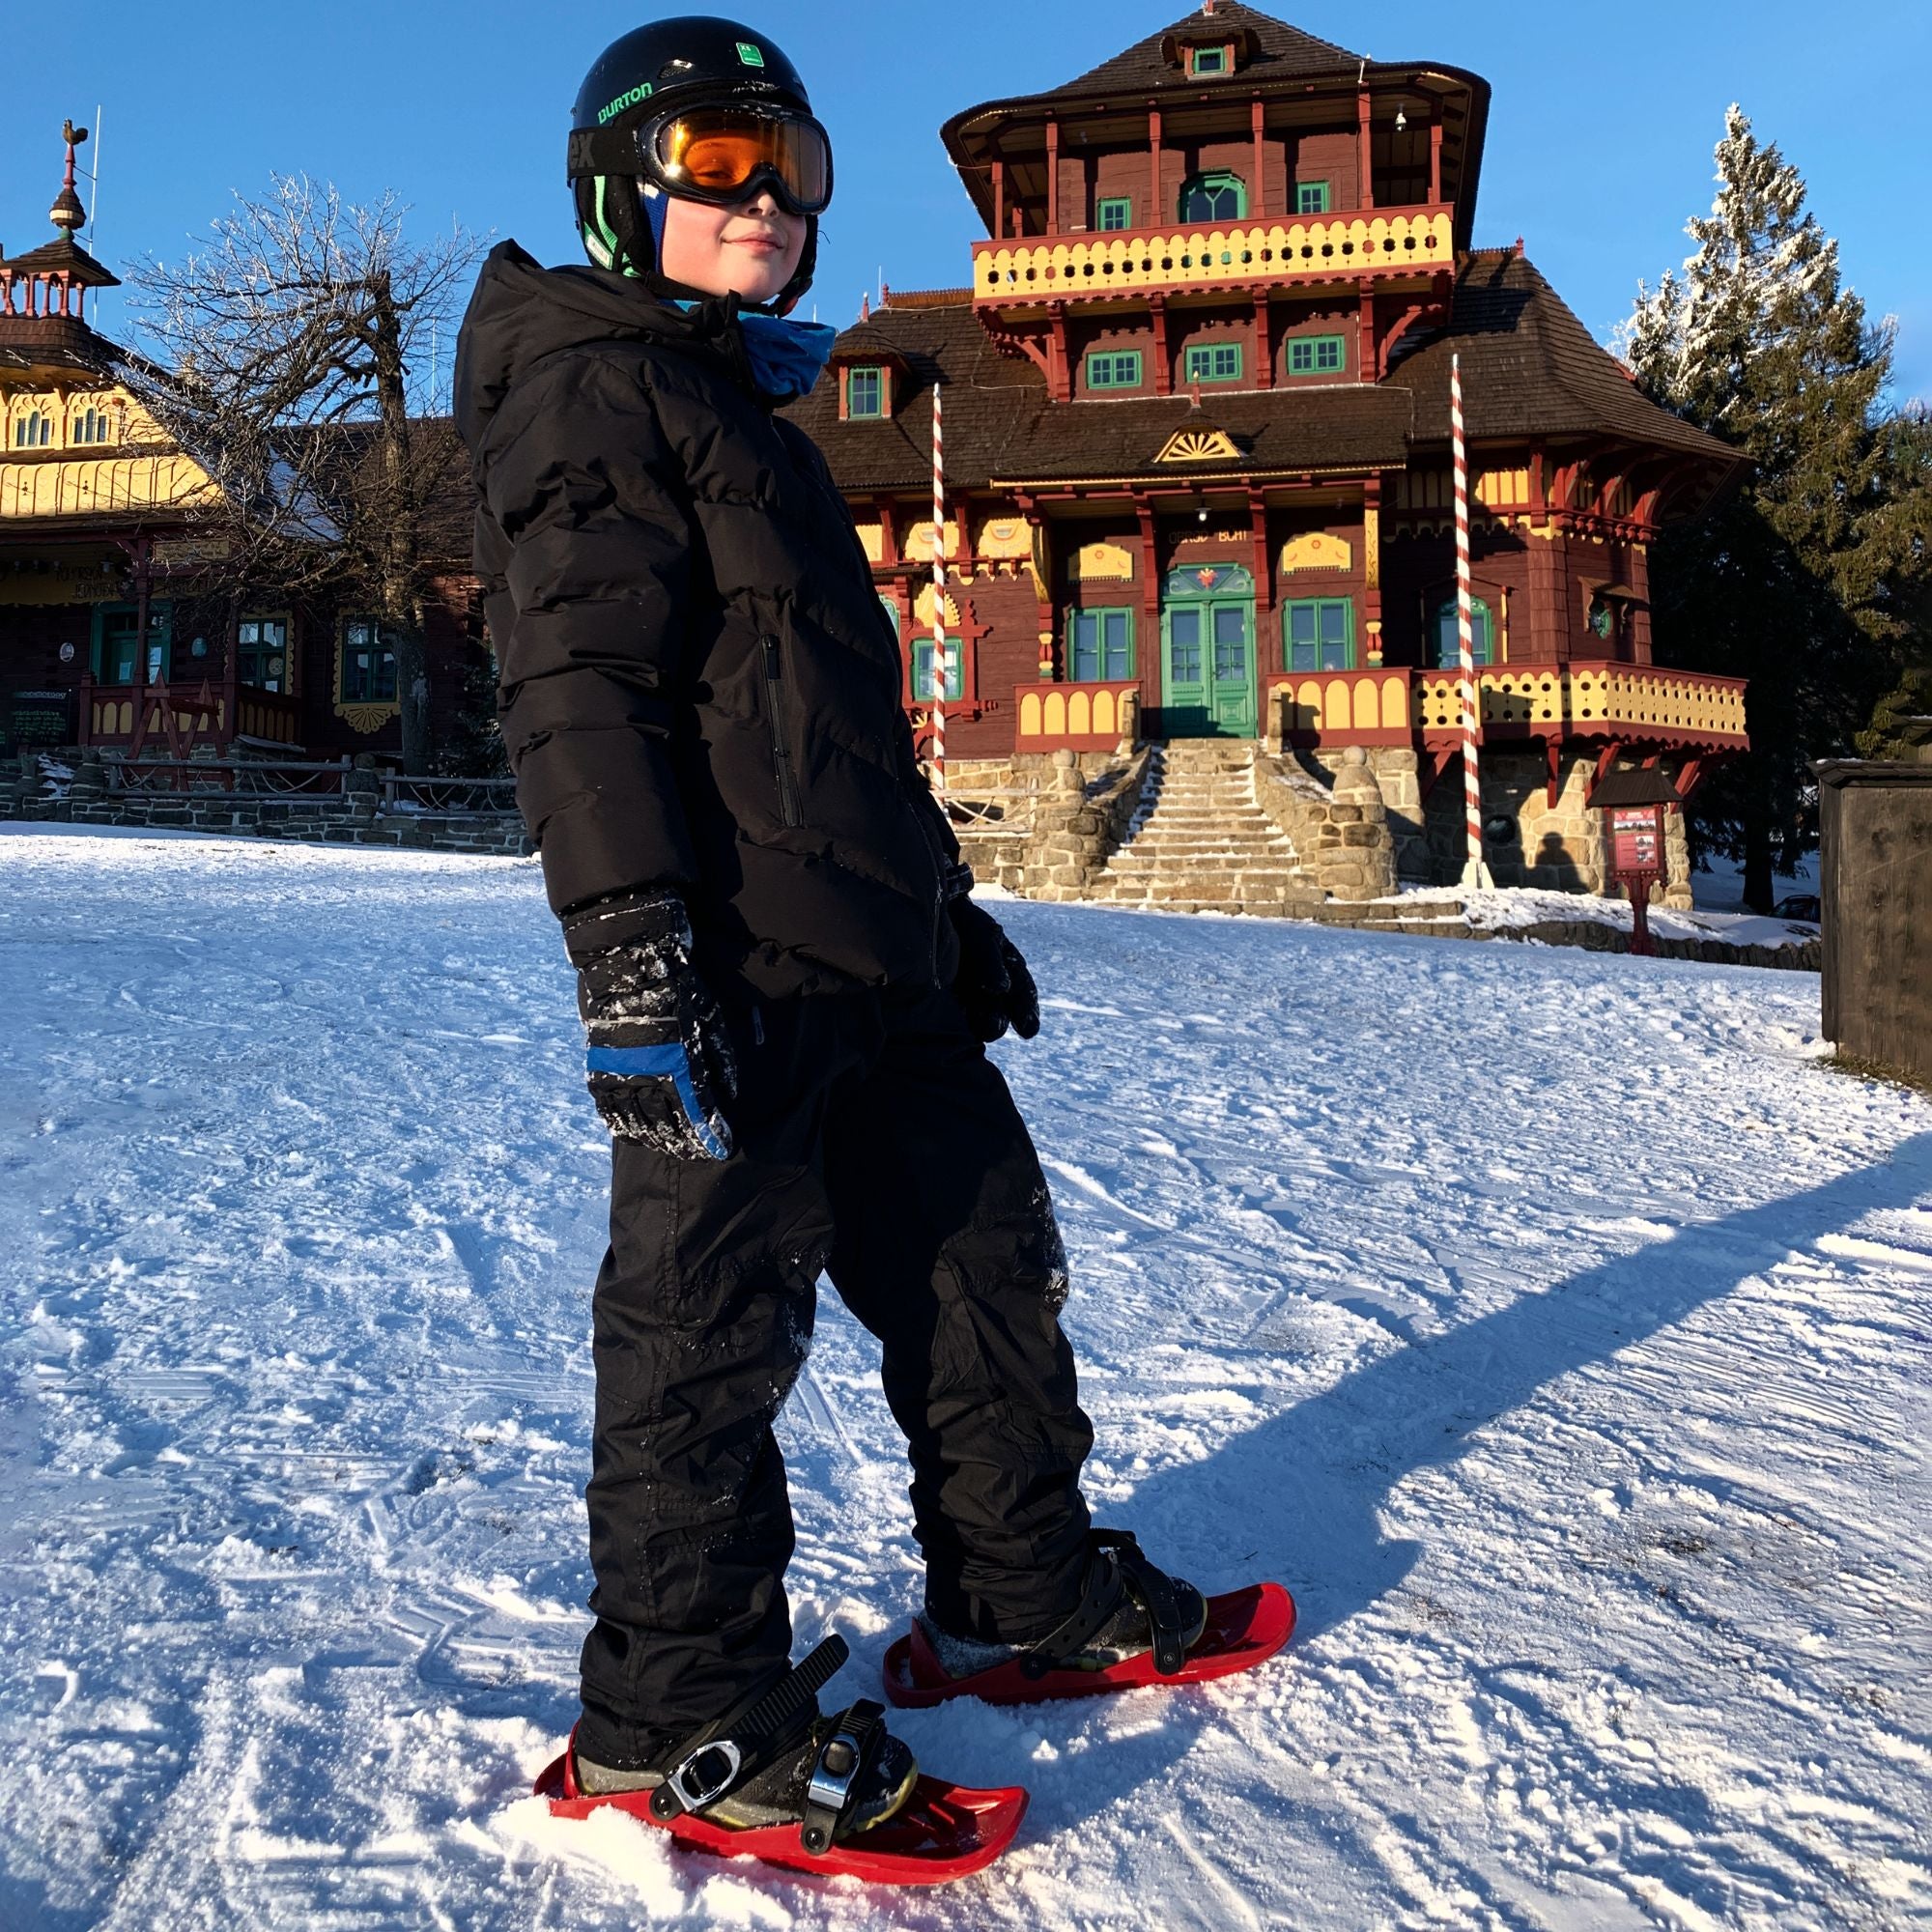 Snowfeet mini skis, downhill skiing, combination of skiing and skating. Skiskating, new winter sport, ski-shoe attachments. Patented award-winning design. Snowfeet for Kids. 